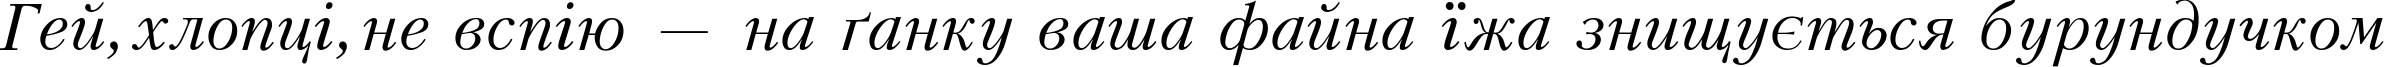 Пример написания шрифтом Kudriashov Italic текста на украинском